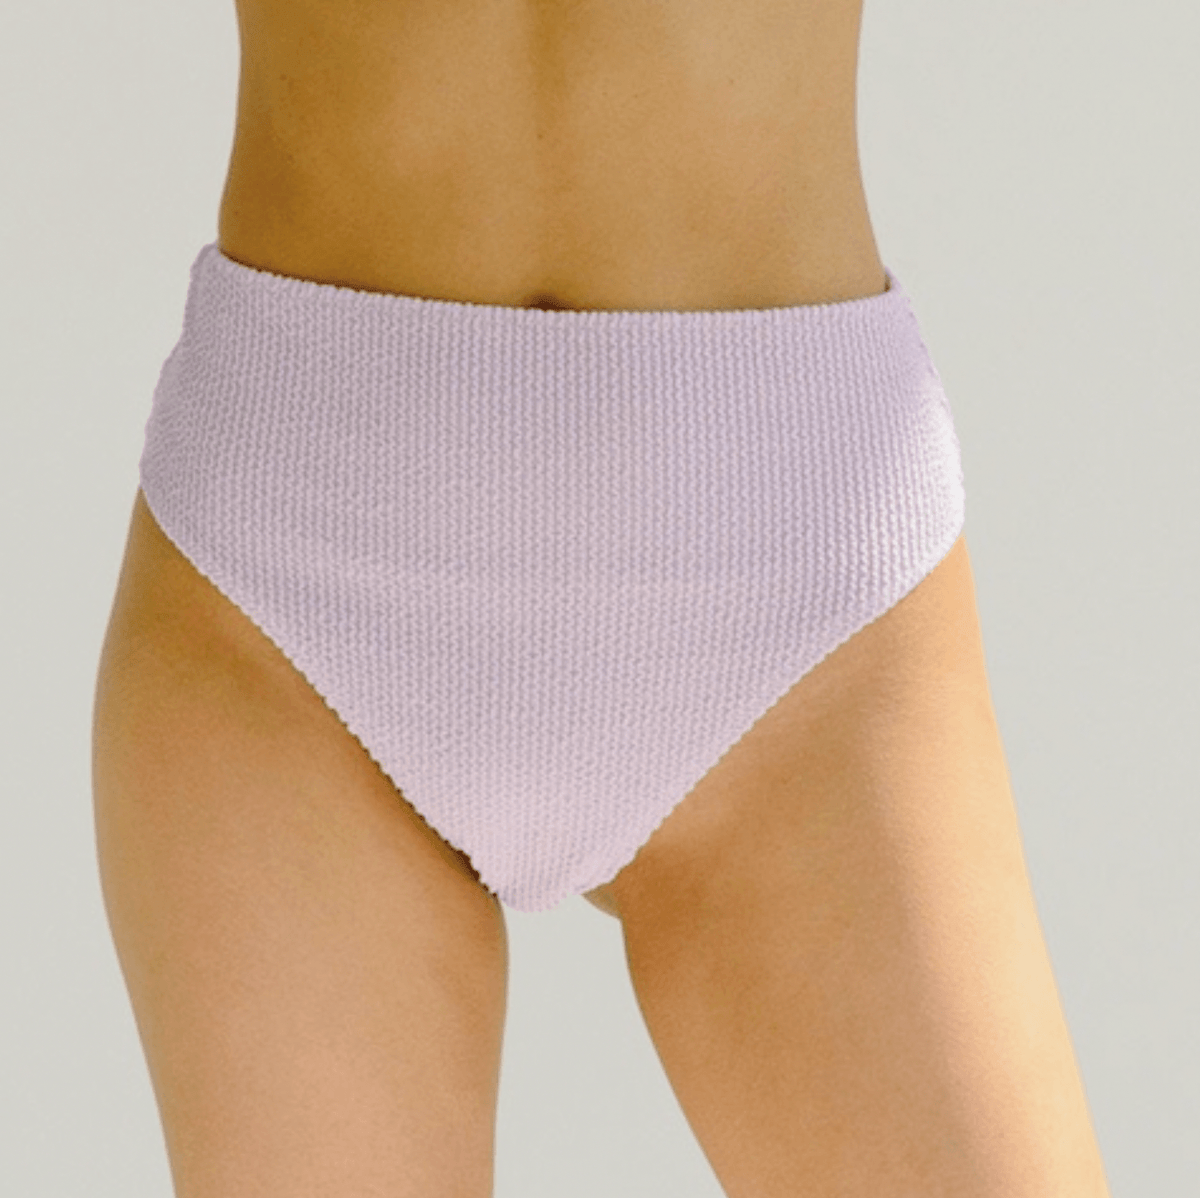 Period underwear – do they work and which brand is best?